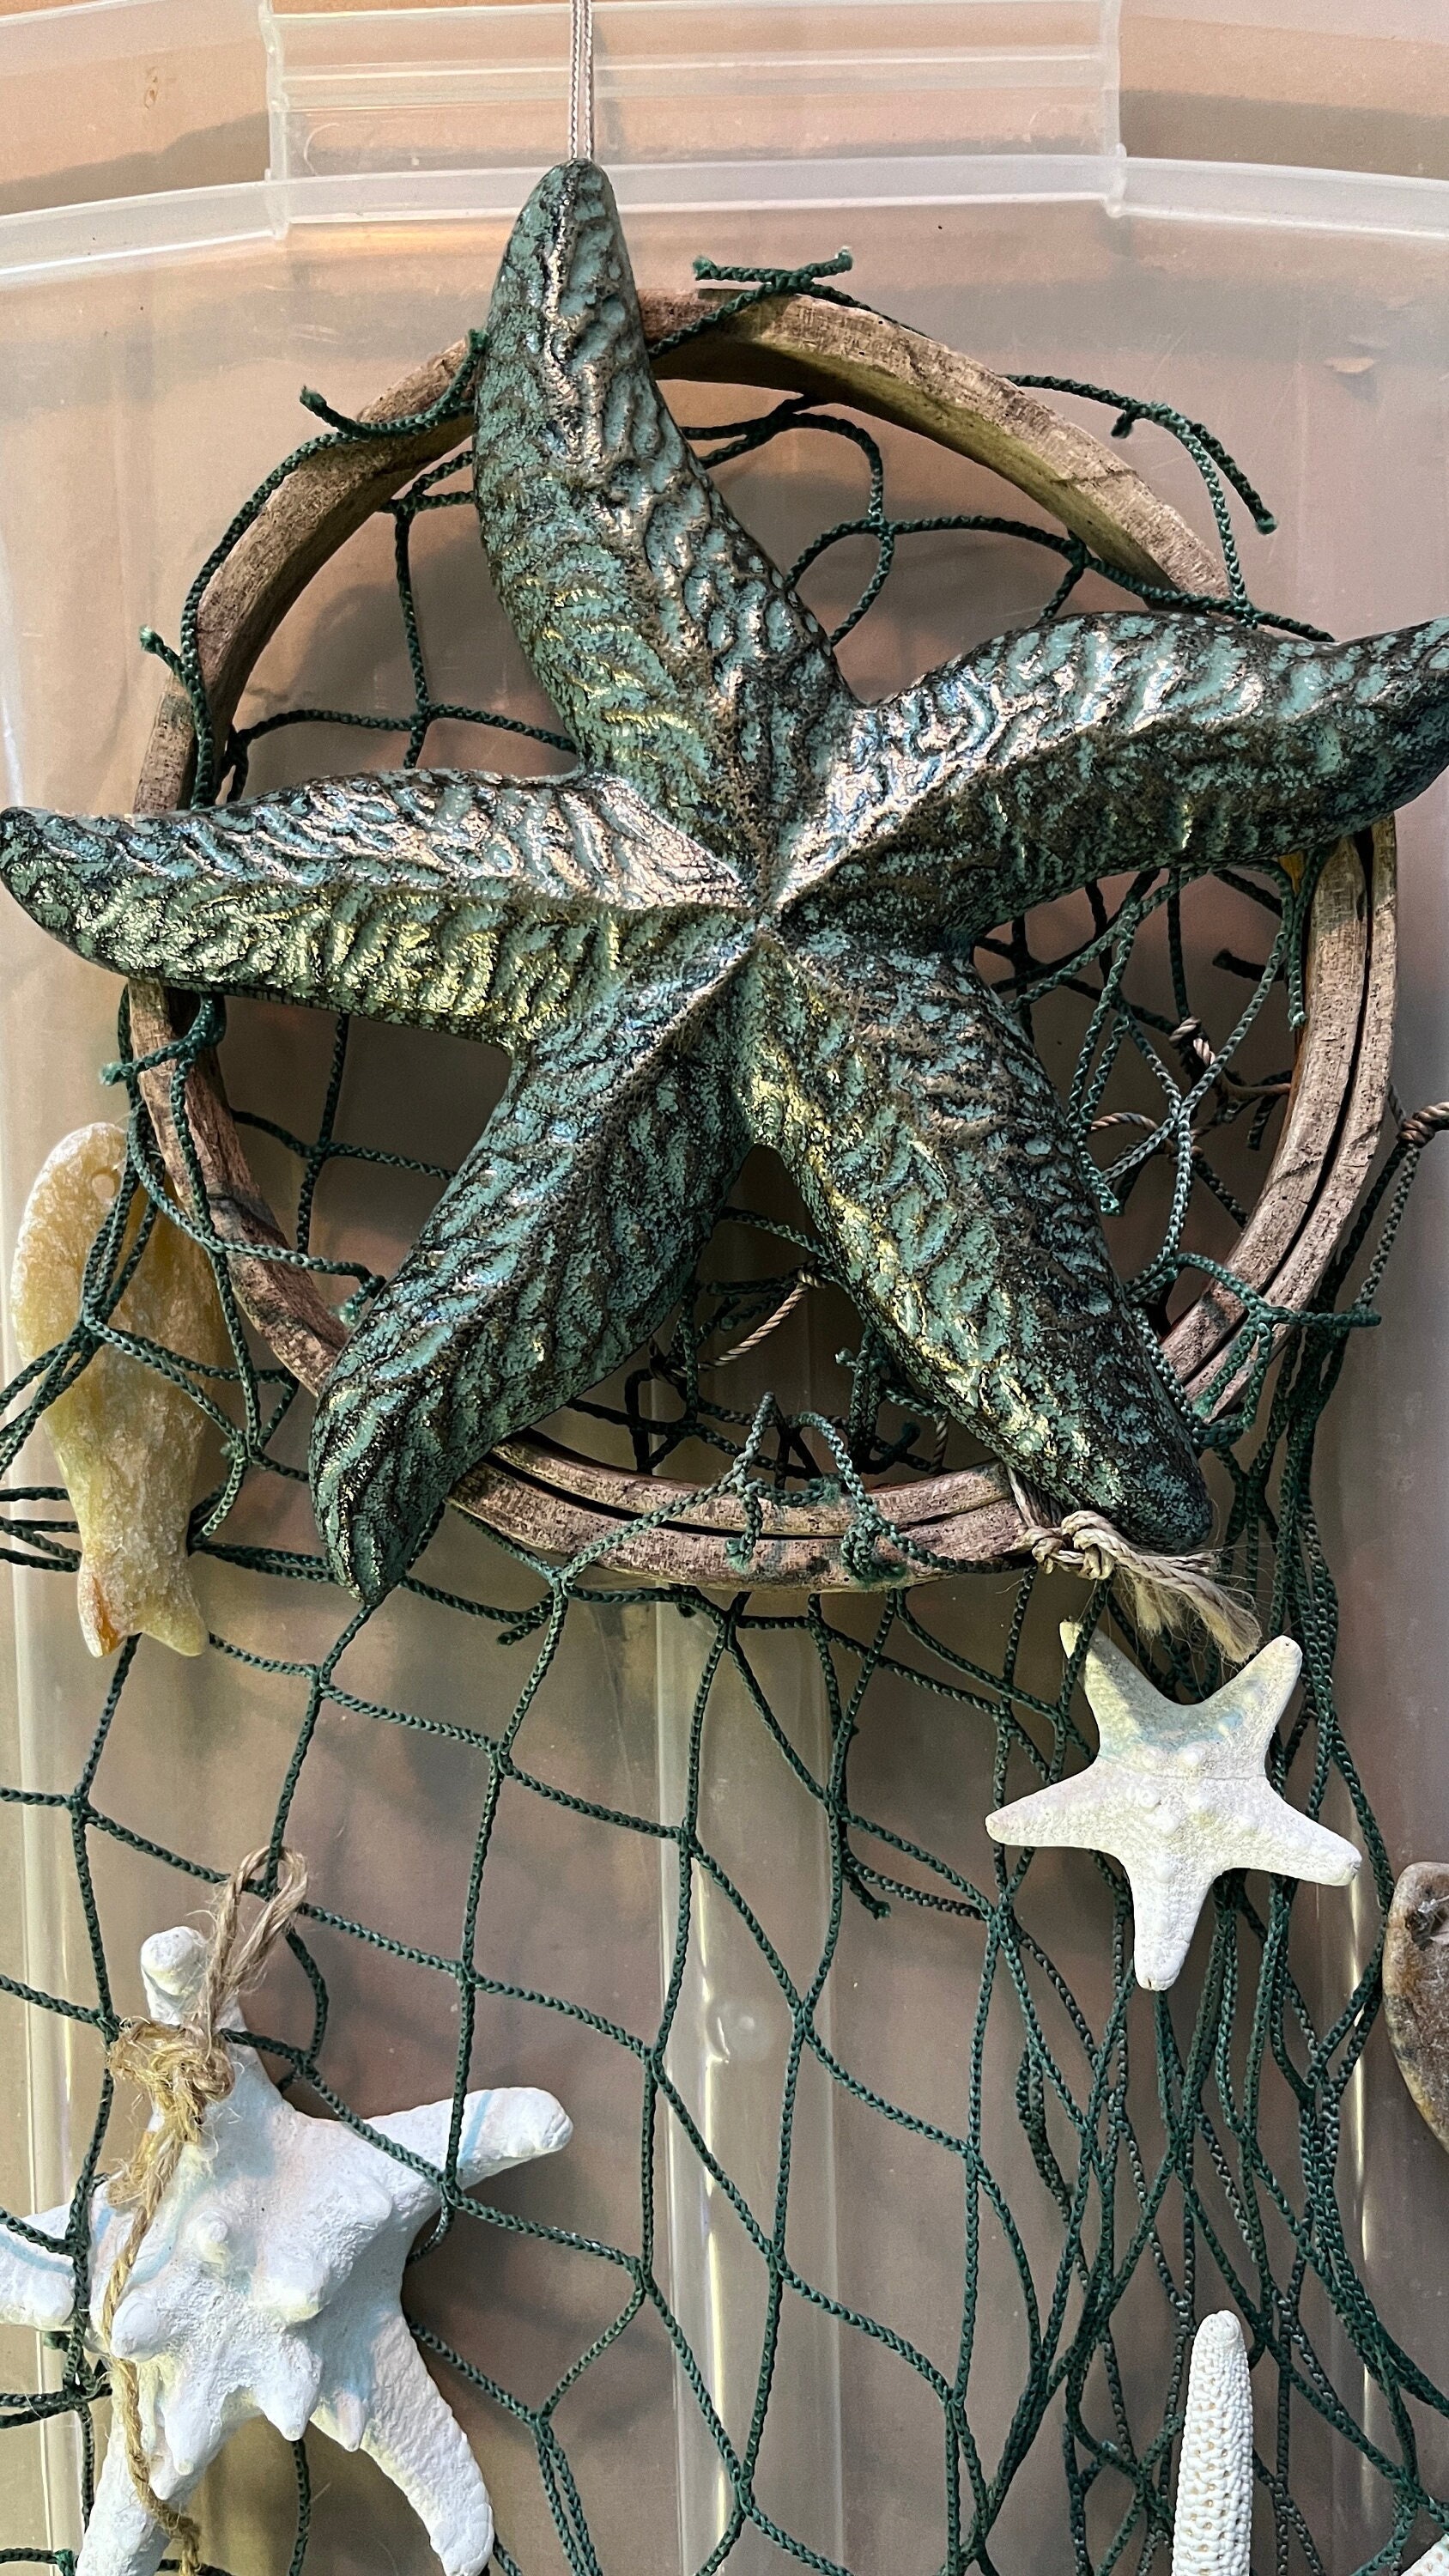 3x5 Decorative Fishing Net W/ Shells & Cork Floats off White Fish